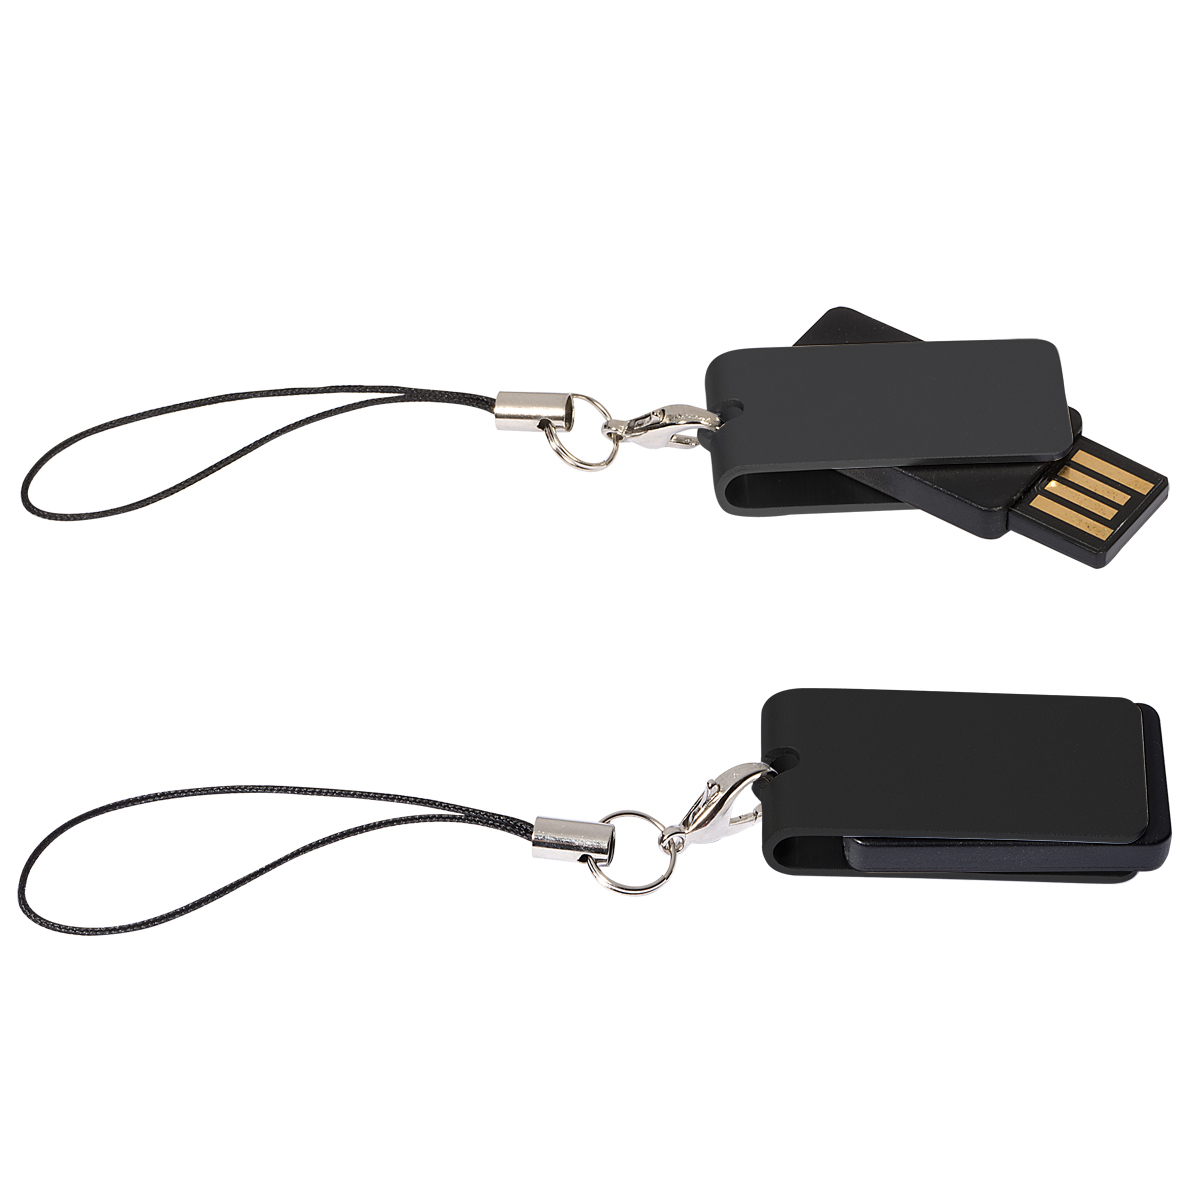 SlimFoldable USB Memory Flash Drive - 16GB